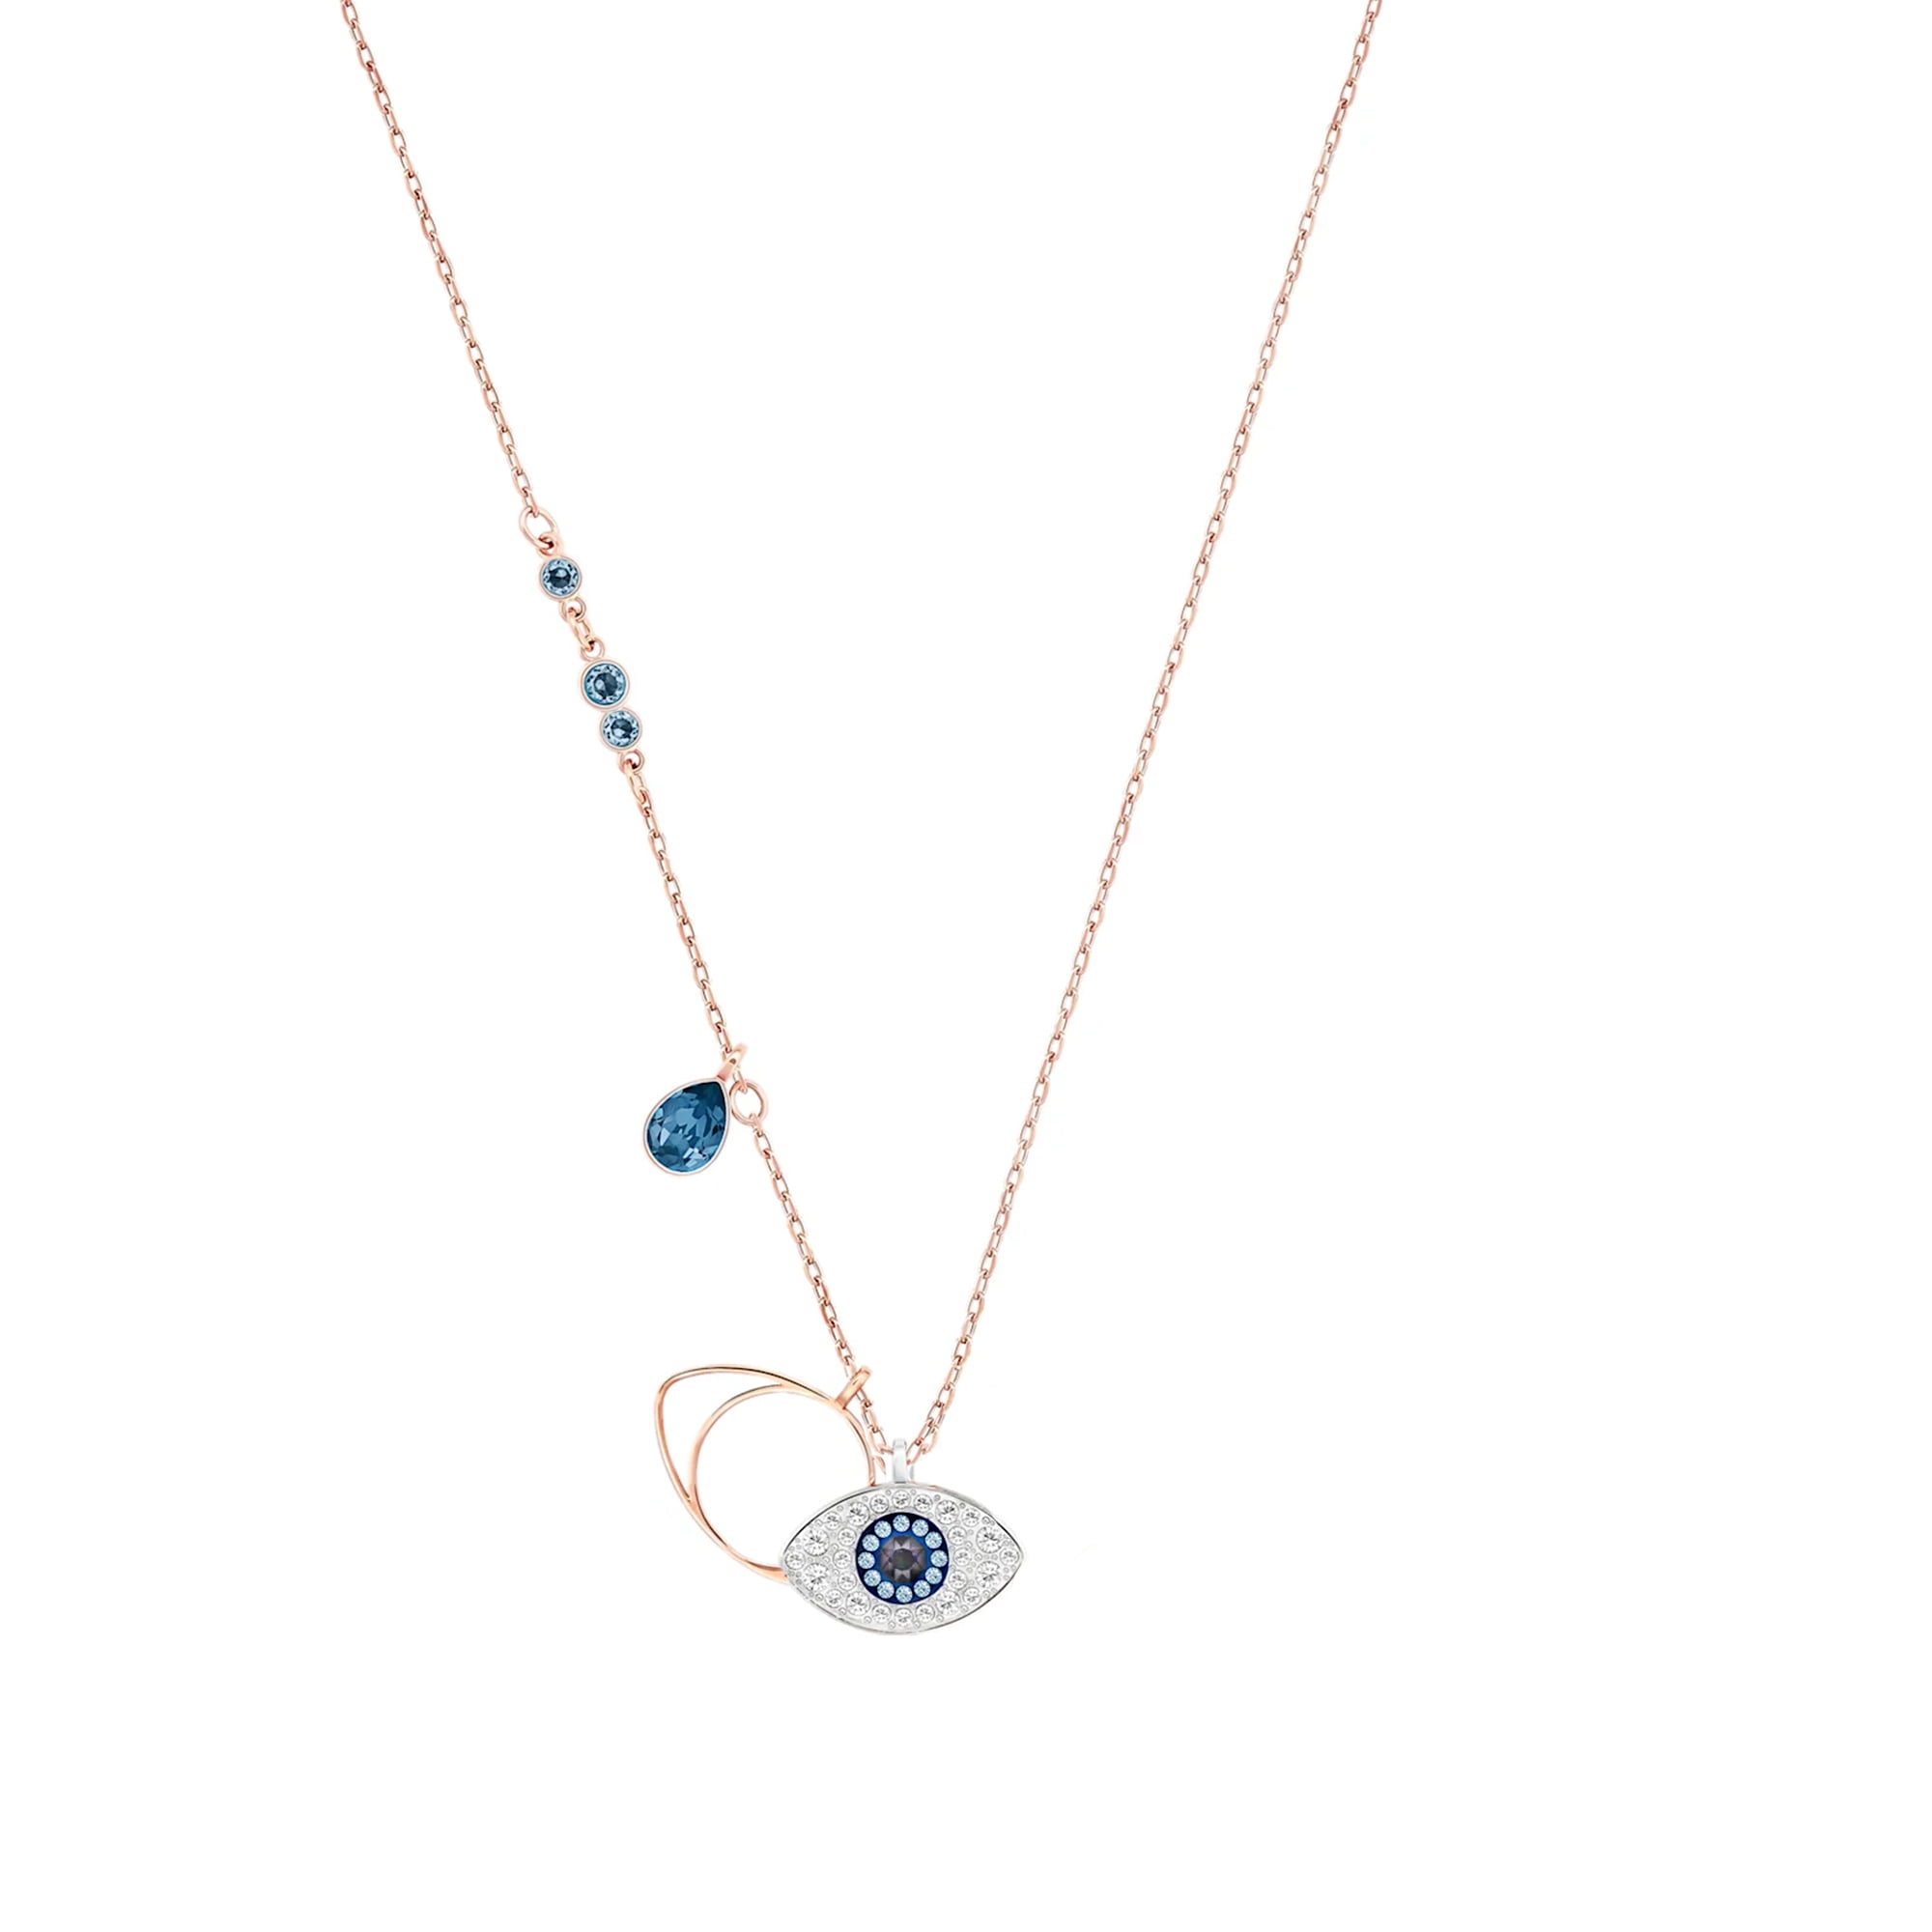 Evil Eye Necklace in Blue Enamel With Diamonds - KAMARIA